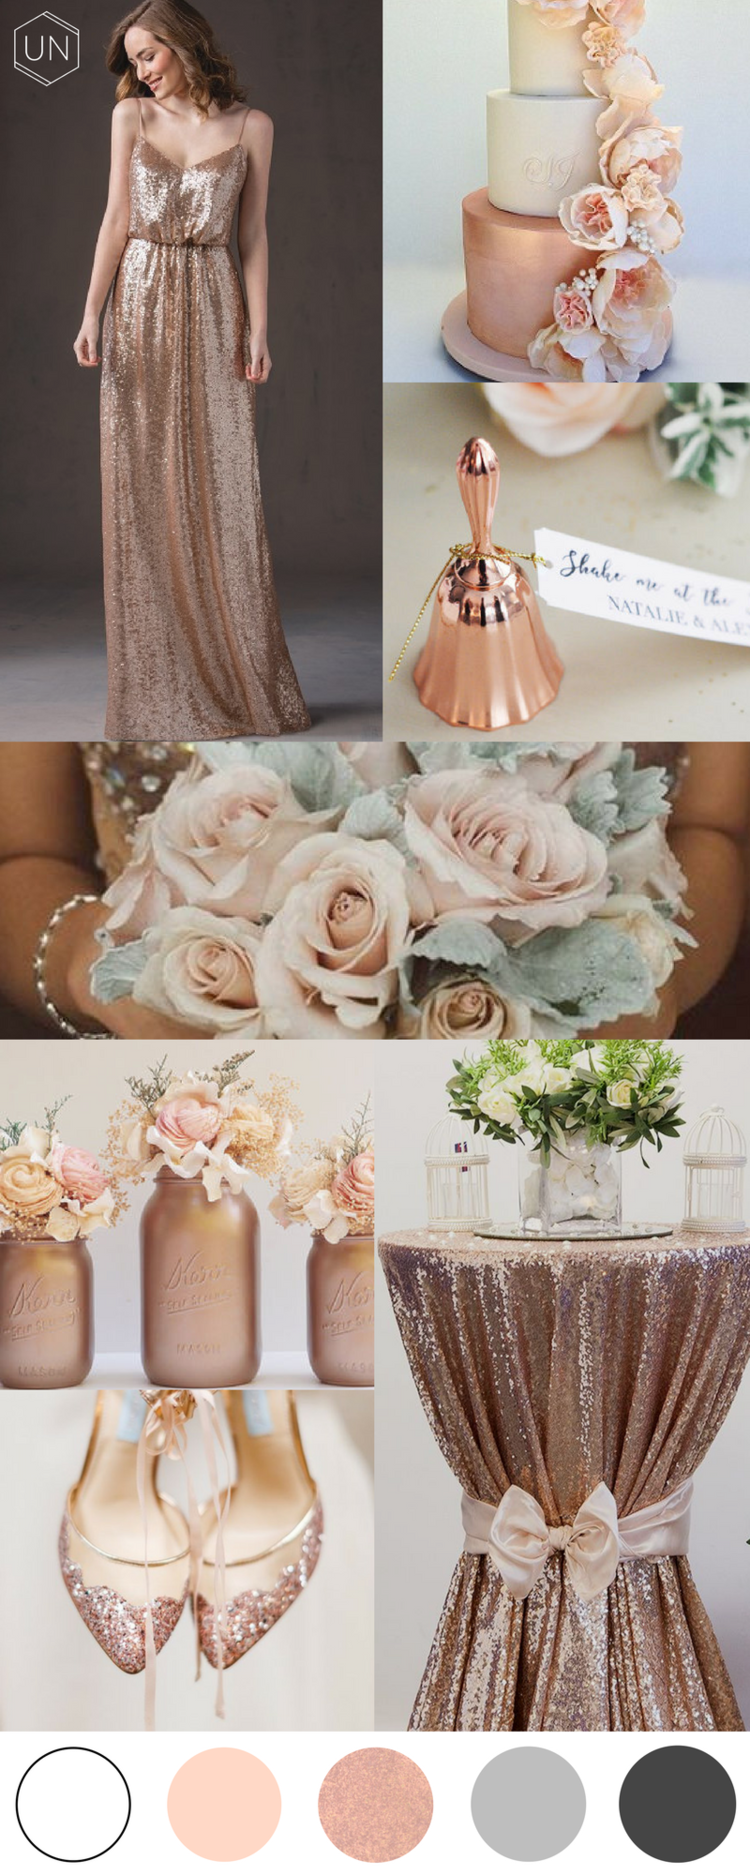 15 wedding Rose Gold inspiration boards ideas